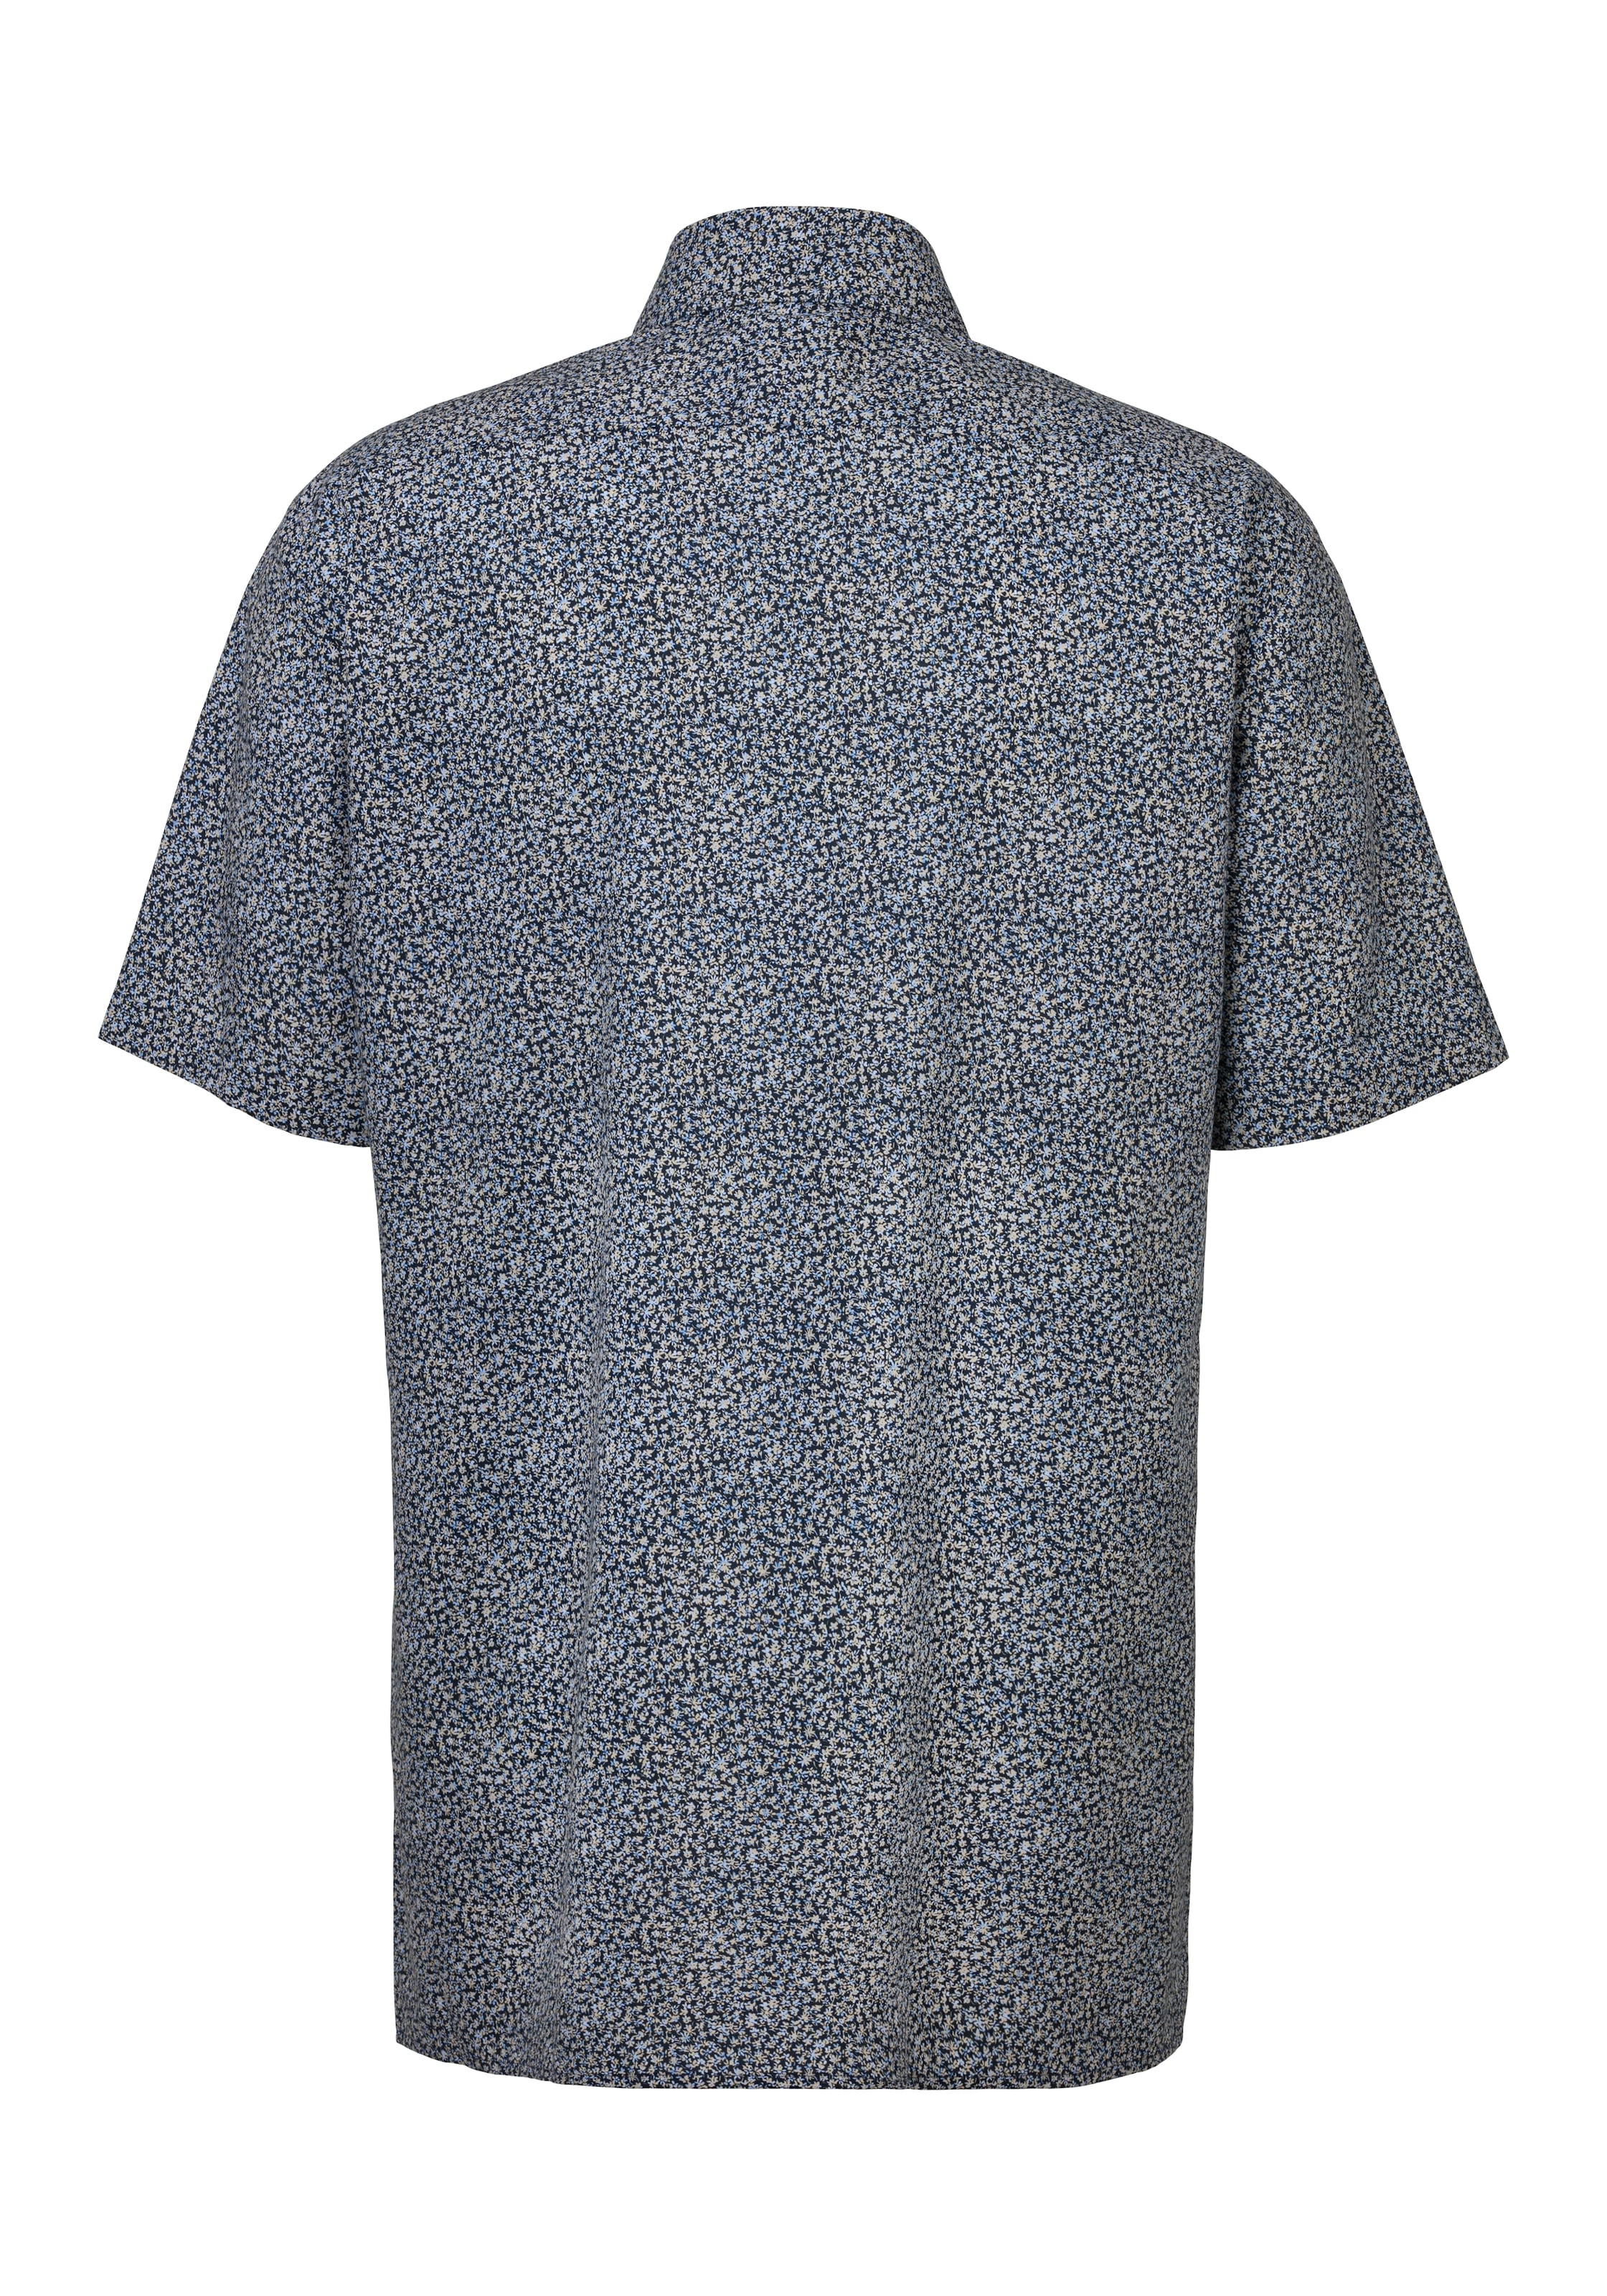 OLYMP Kurzarmhemd »Luxor Modern Fit«, mit Allover-Print, bügelfrei, atmungsaktiv